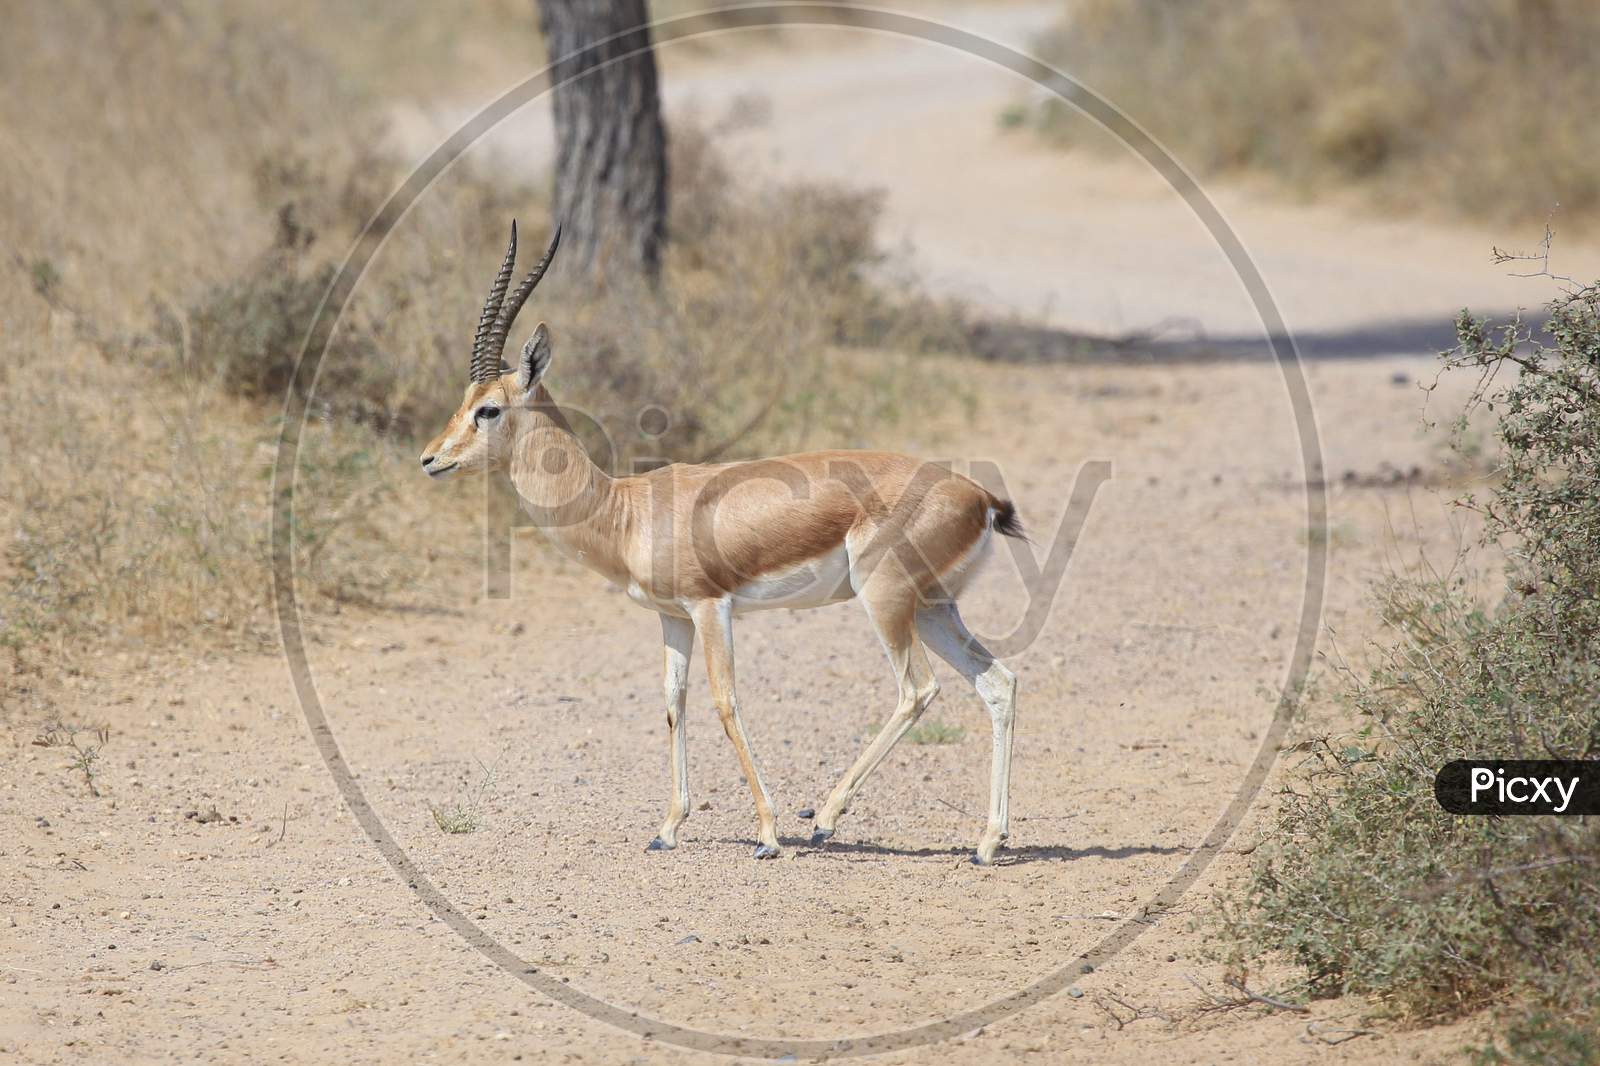 Horned Deer In Grass Fields In Jodhpur, Rajasthan